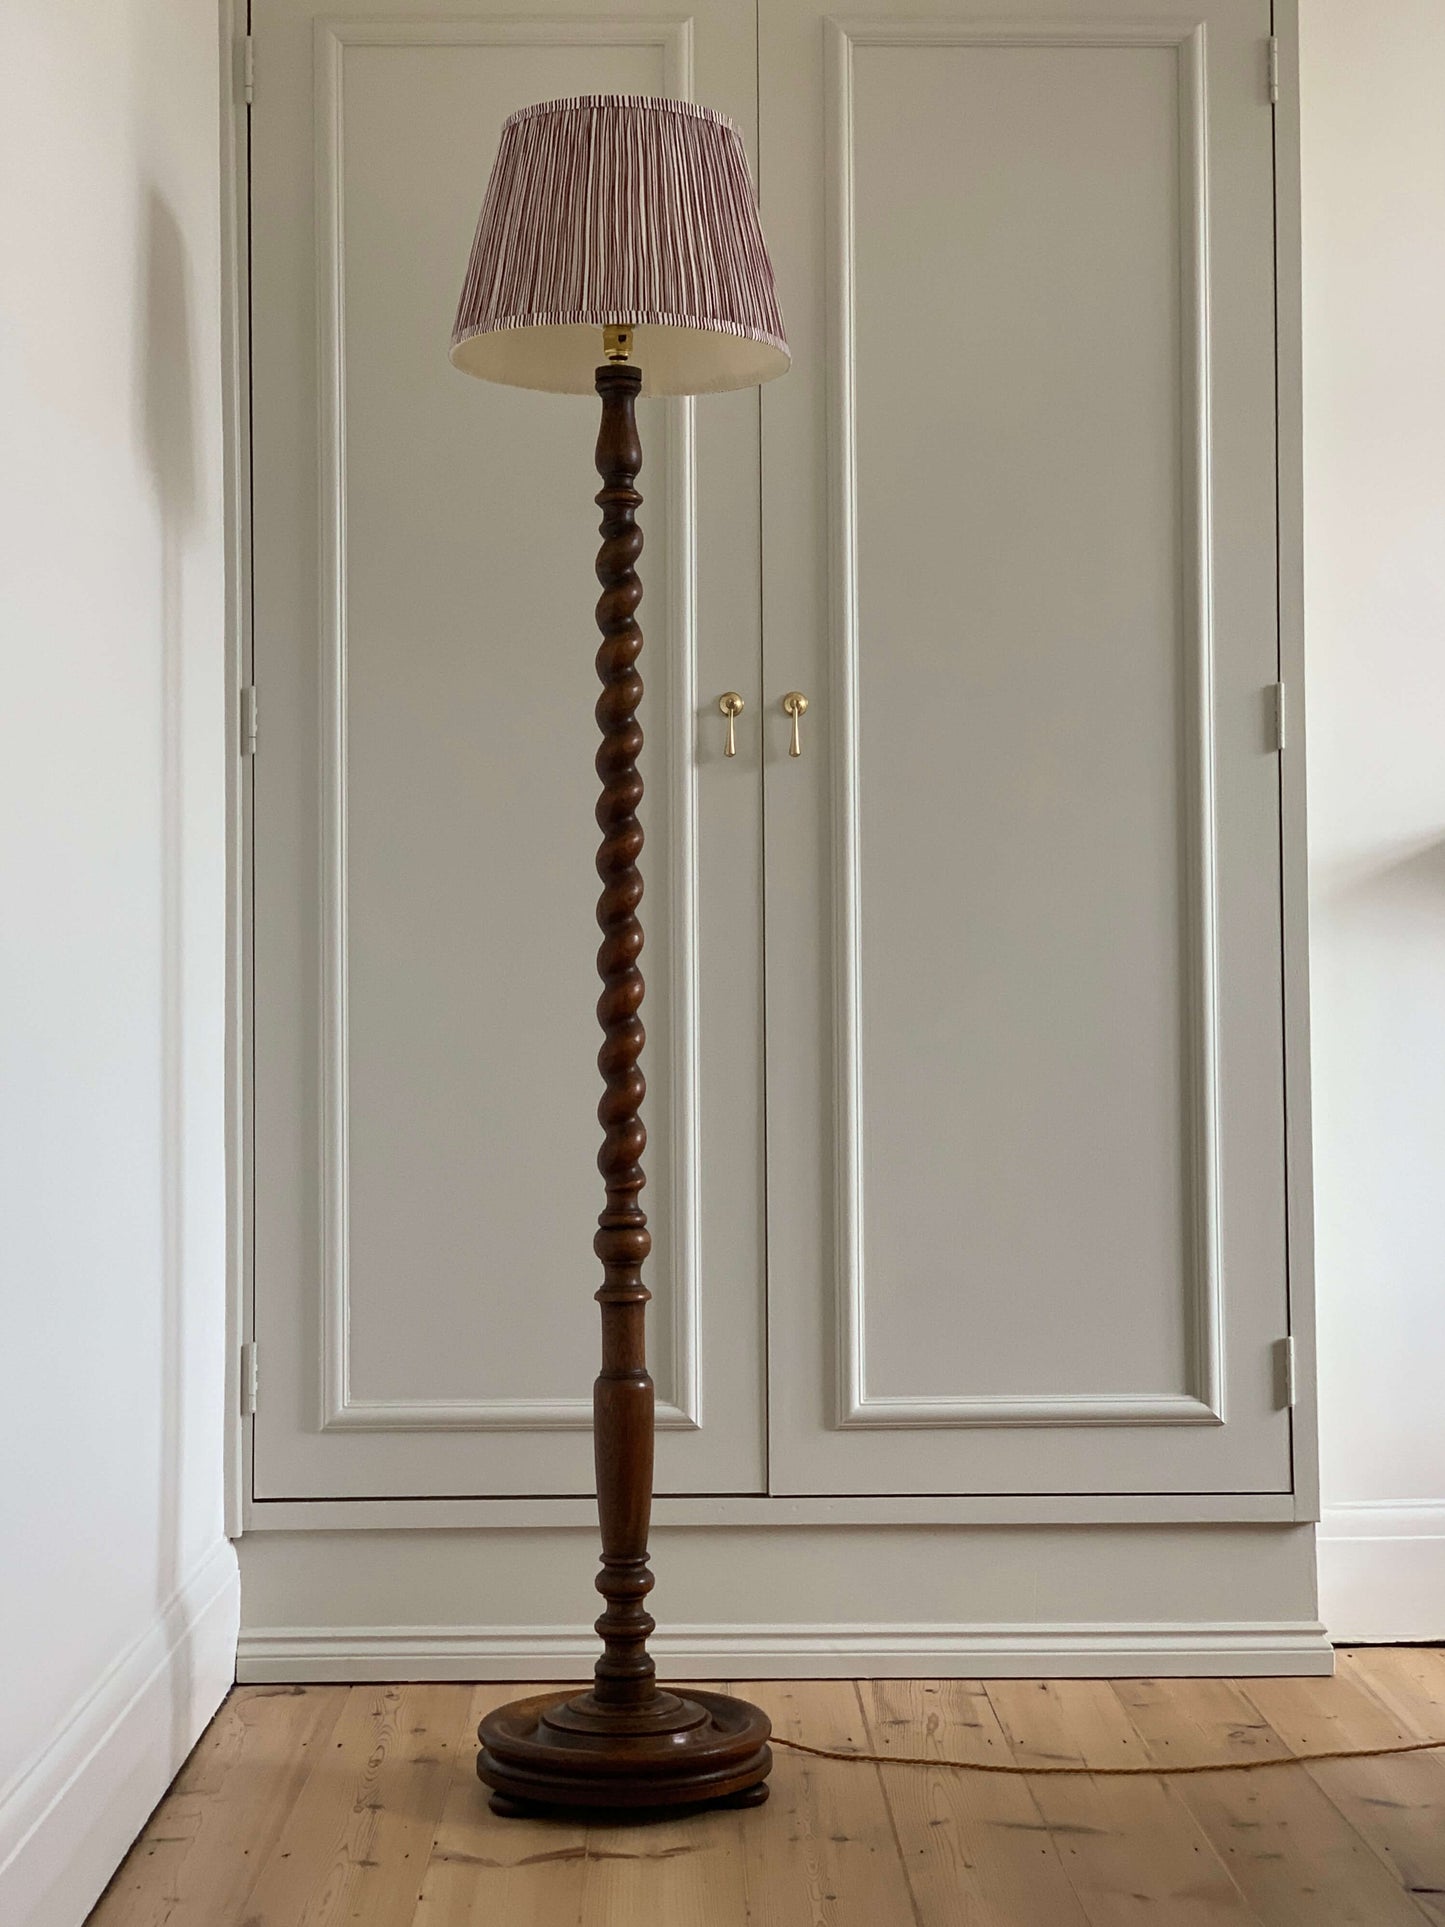 Antique tall barley twist floor lamp